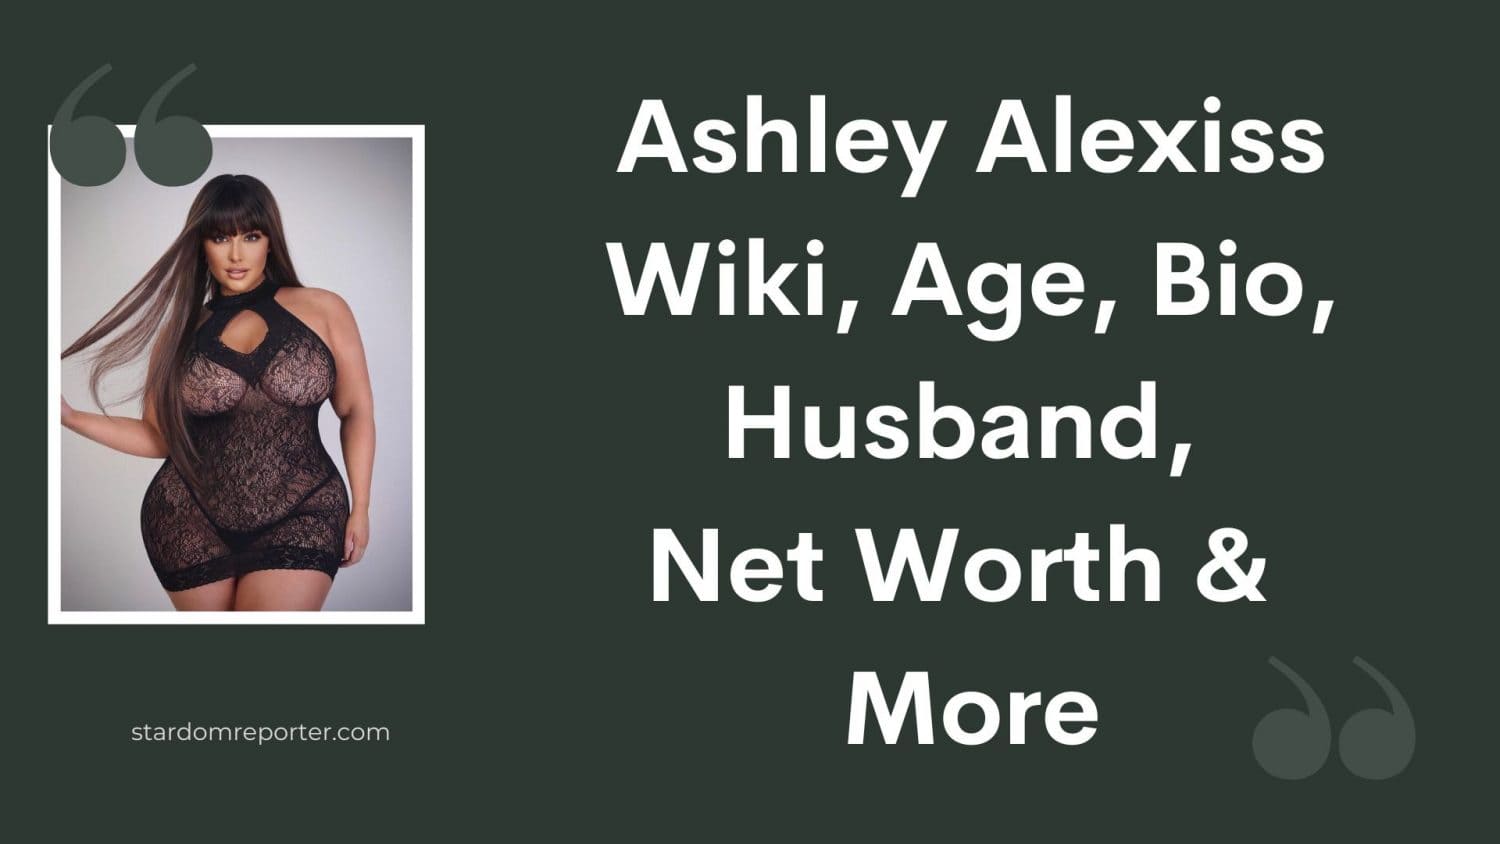 Ashley Alexiss Wiki, Age, Bio, Husband, Net Worth & More - 33